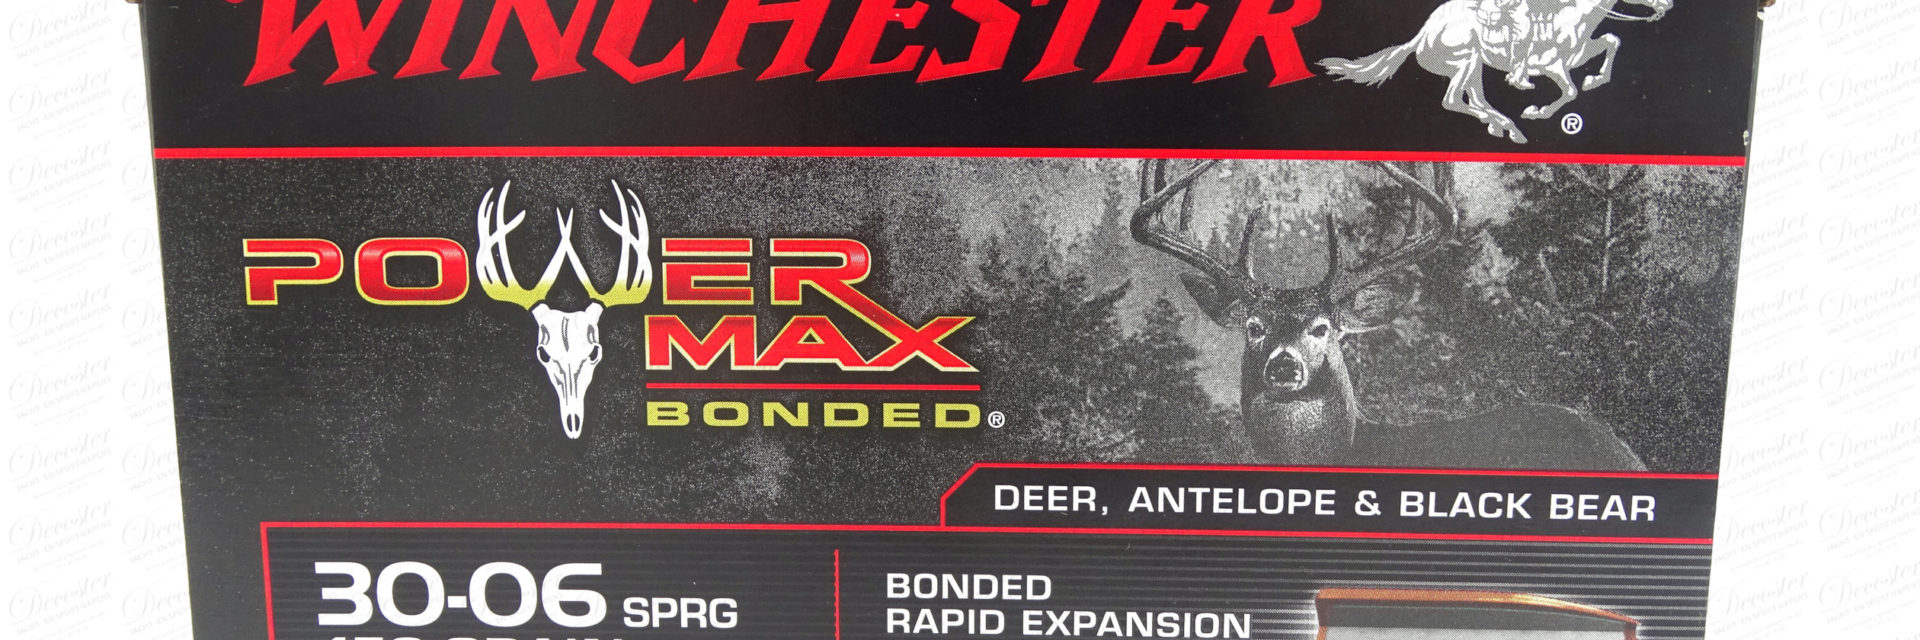 Winchester Power Max Bonded 30 06SPRG 150gr